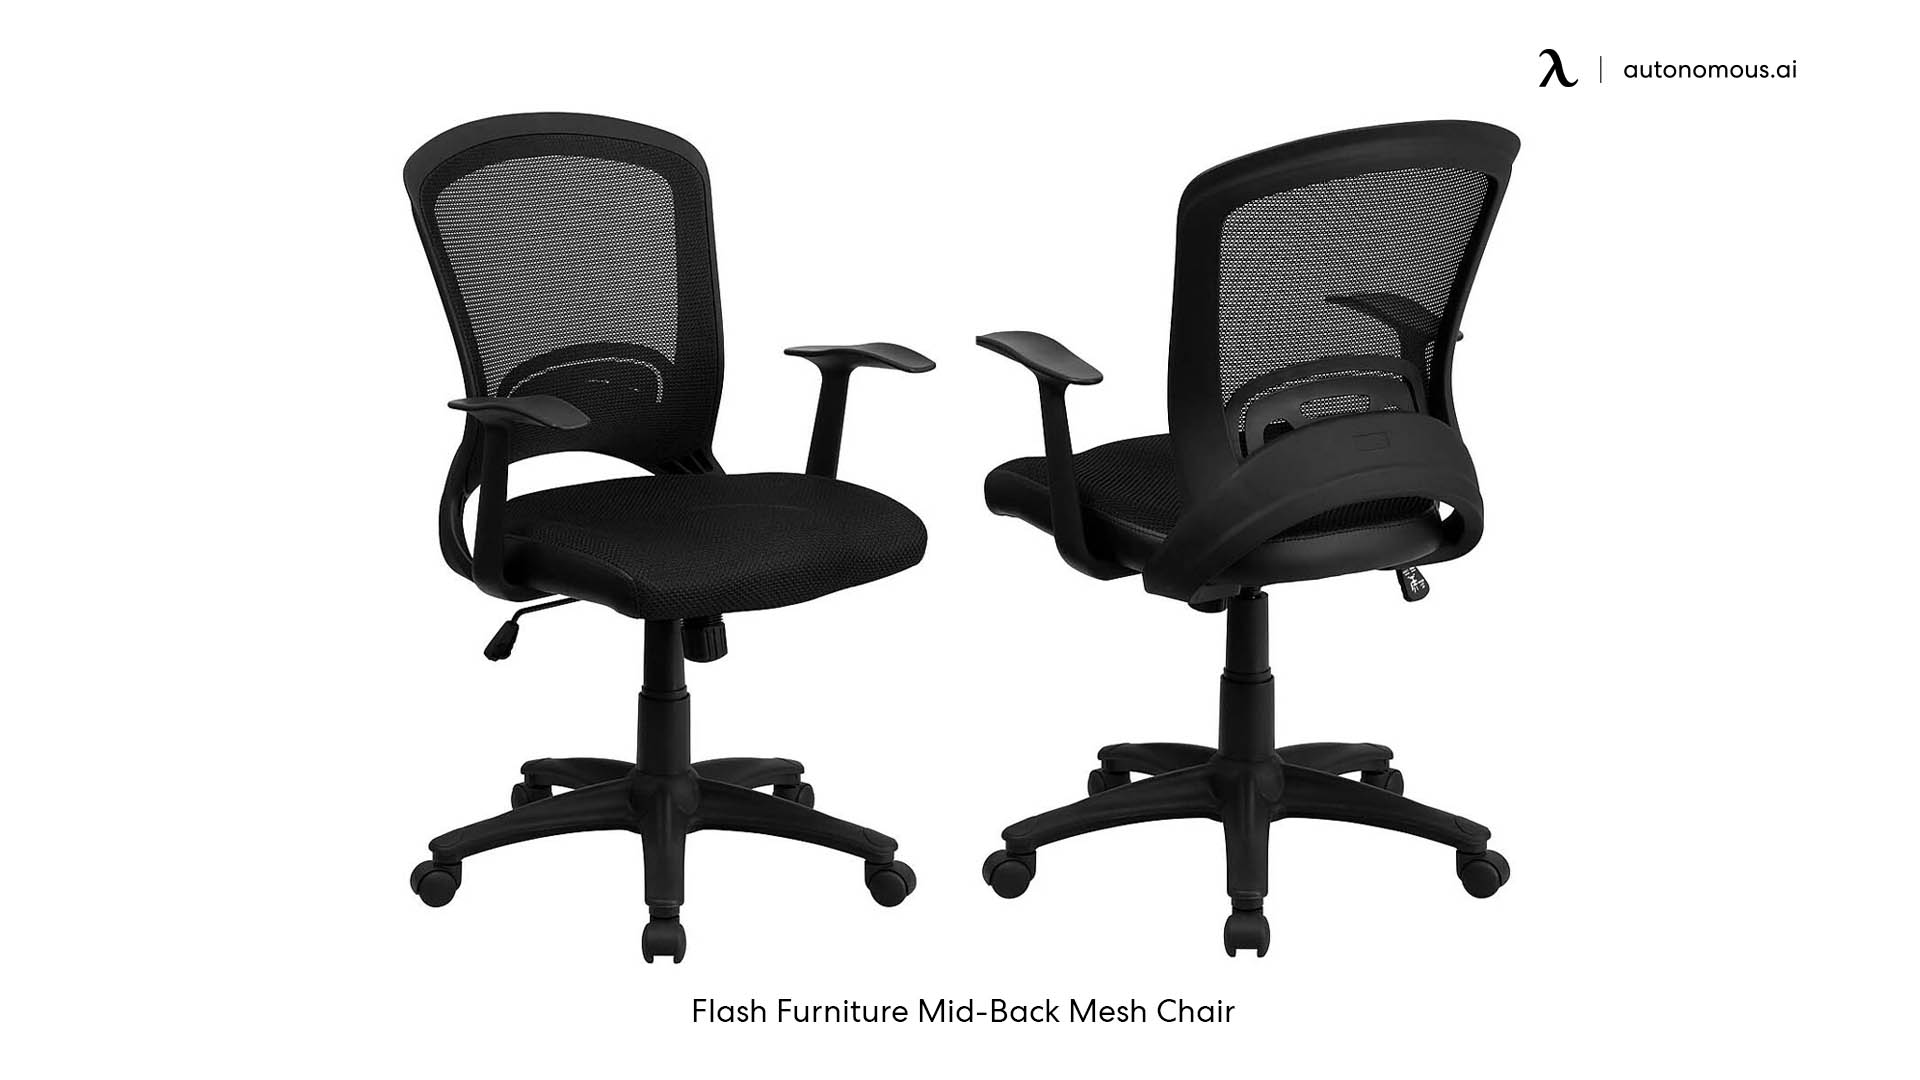 Flash Furniture's Mid-back Black ergonomic swivel chair